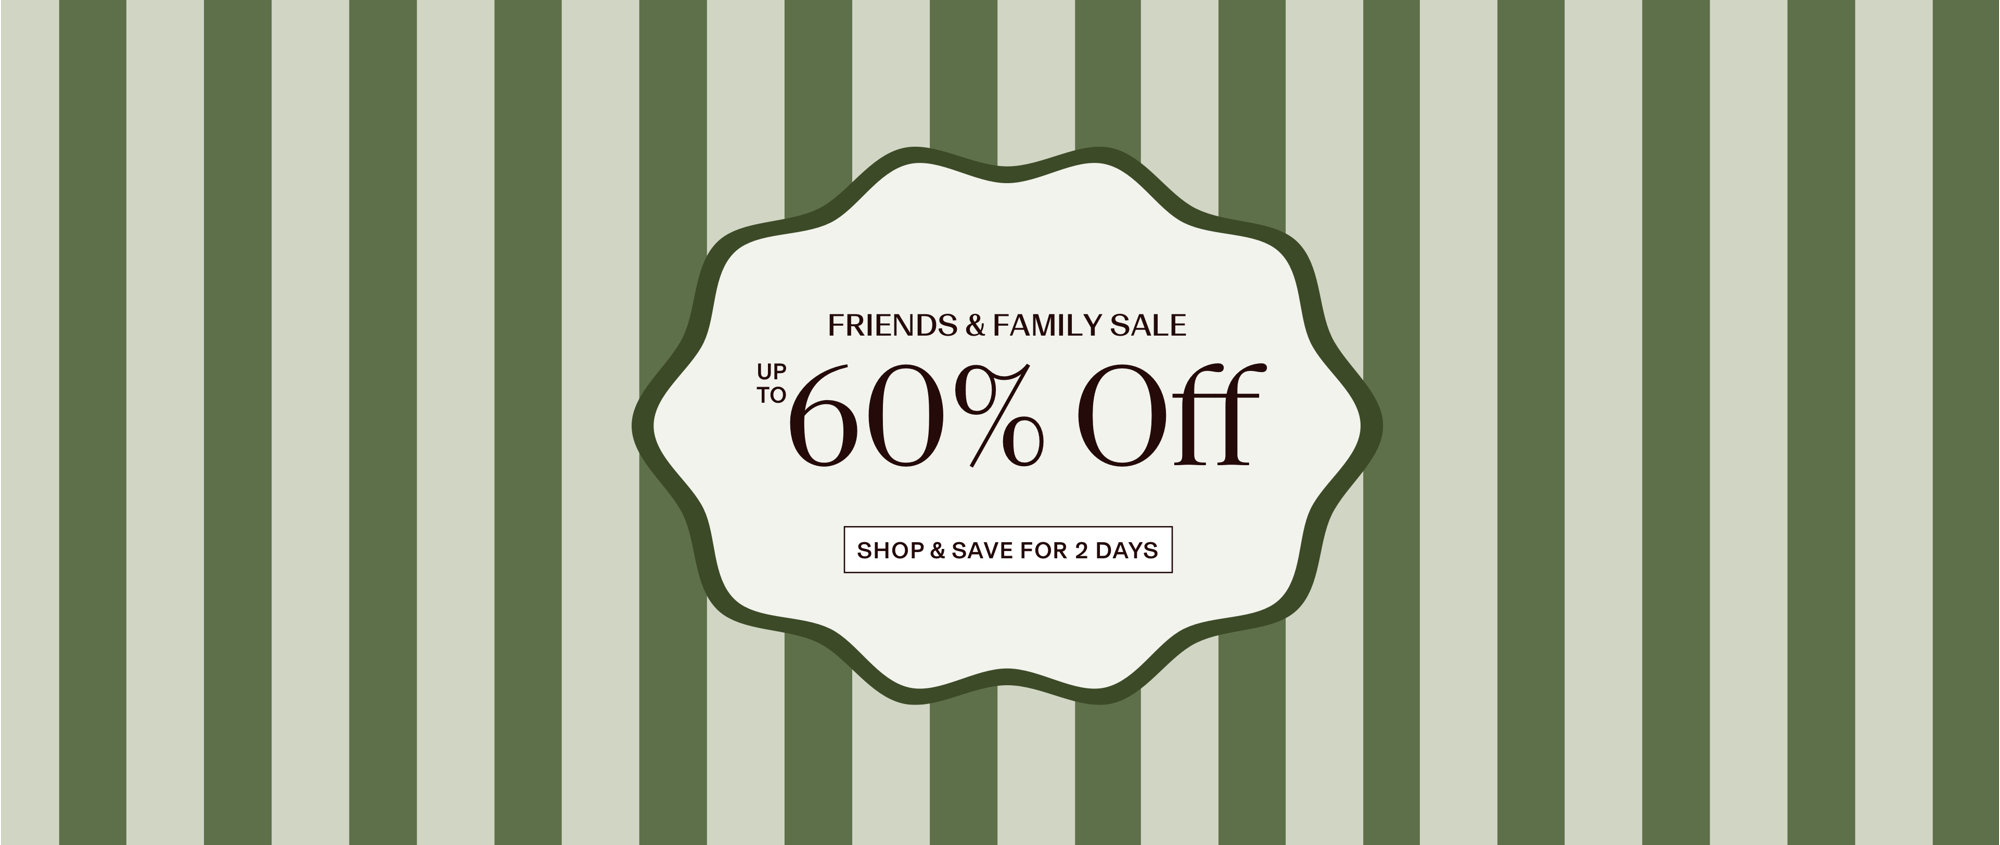 Friends & Family Sale